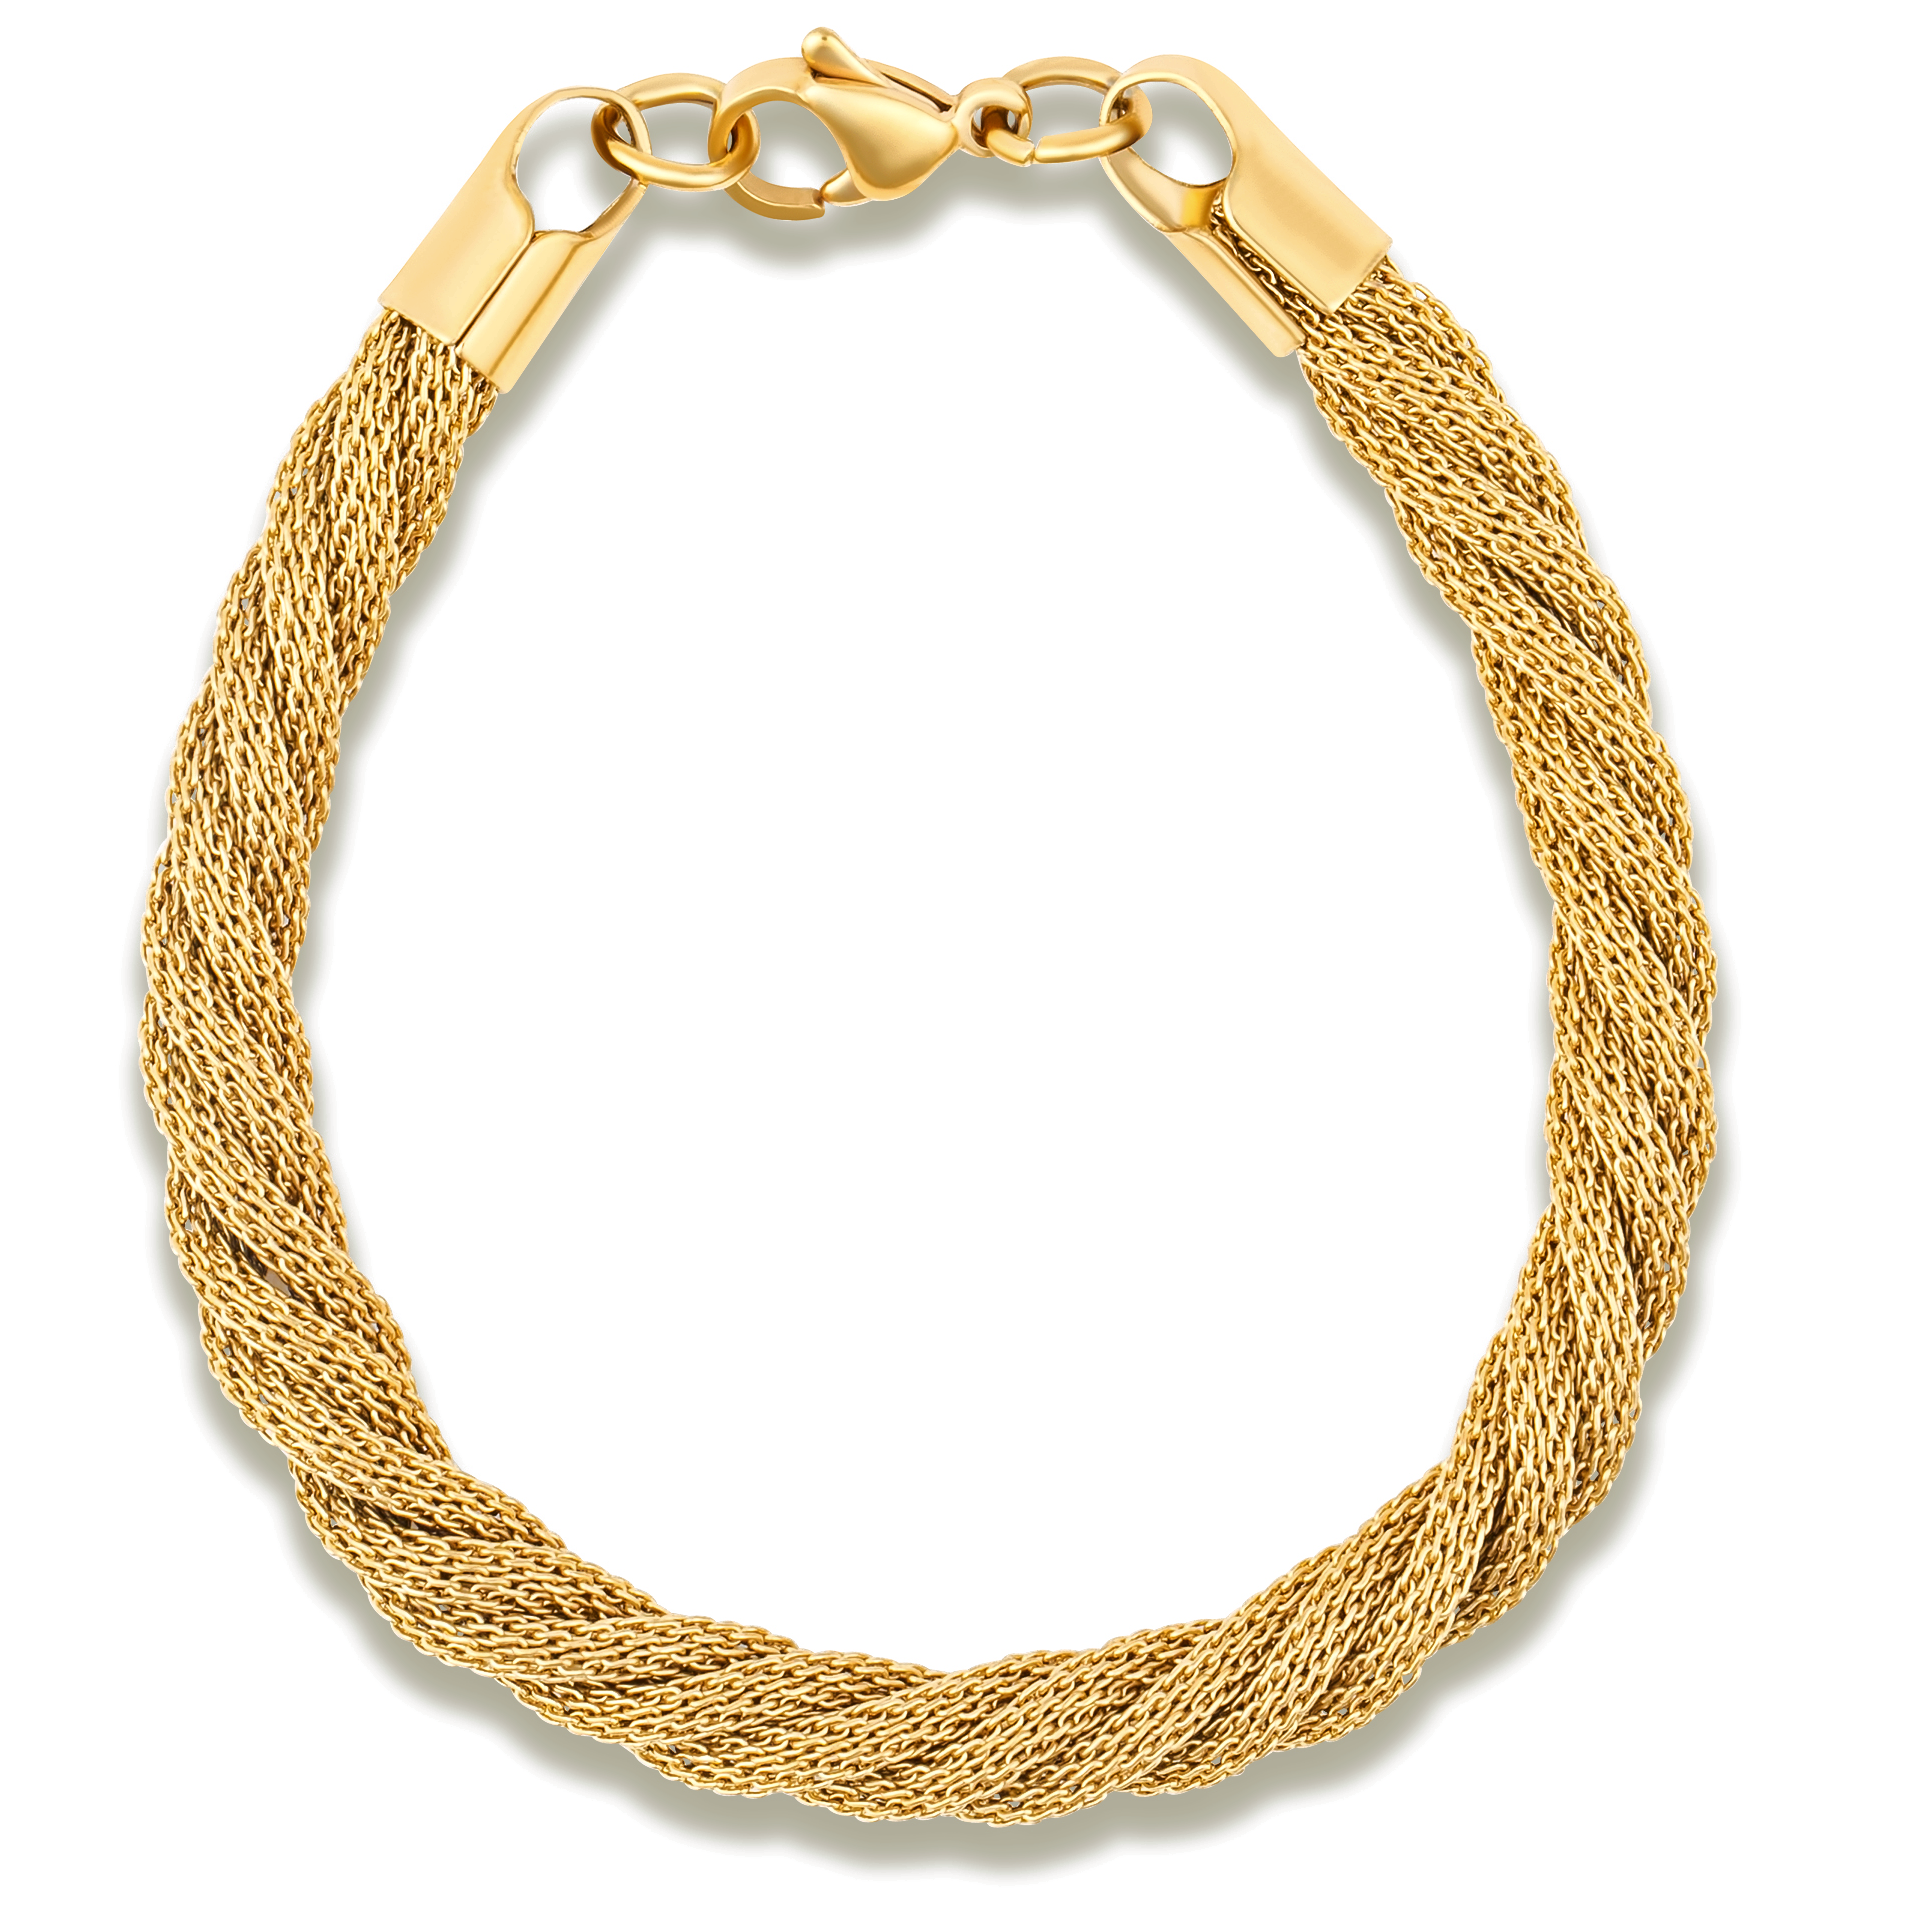 Danica Mesh Rope Chain Bracelet - Gold